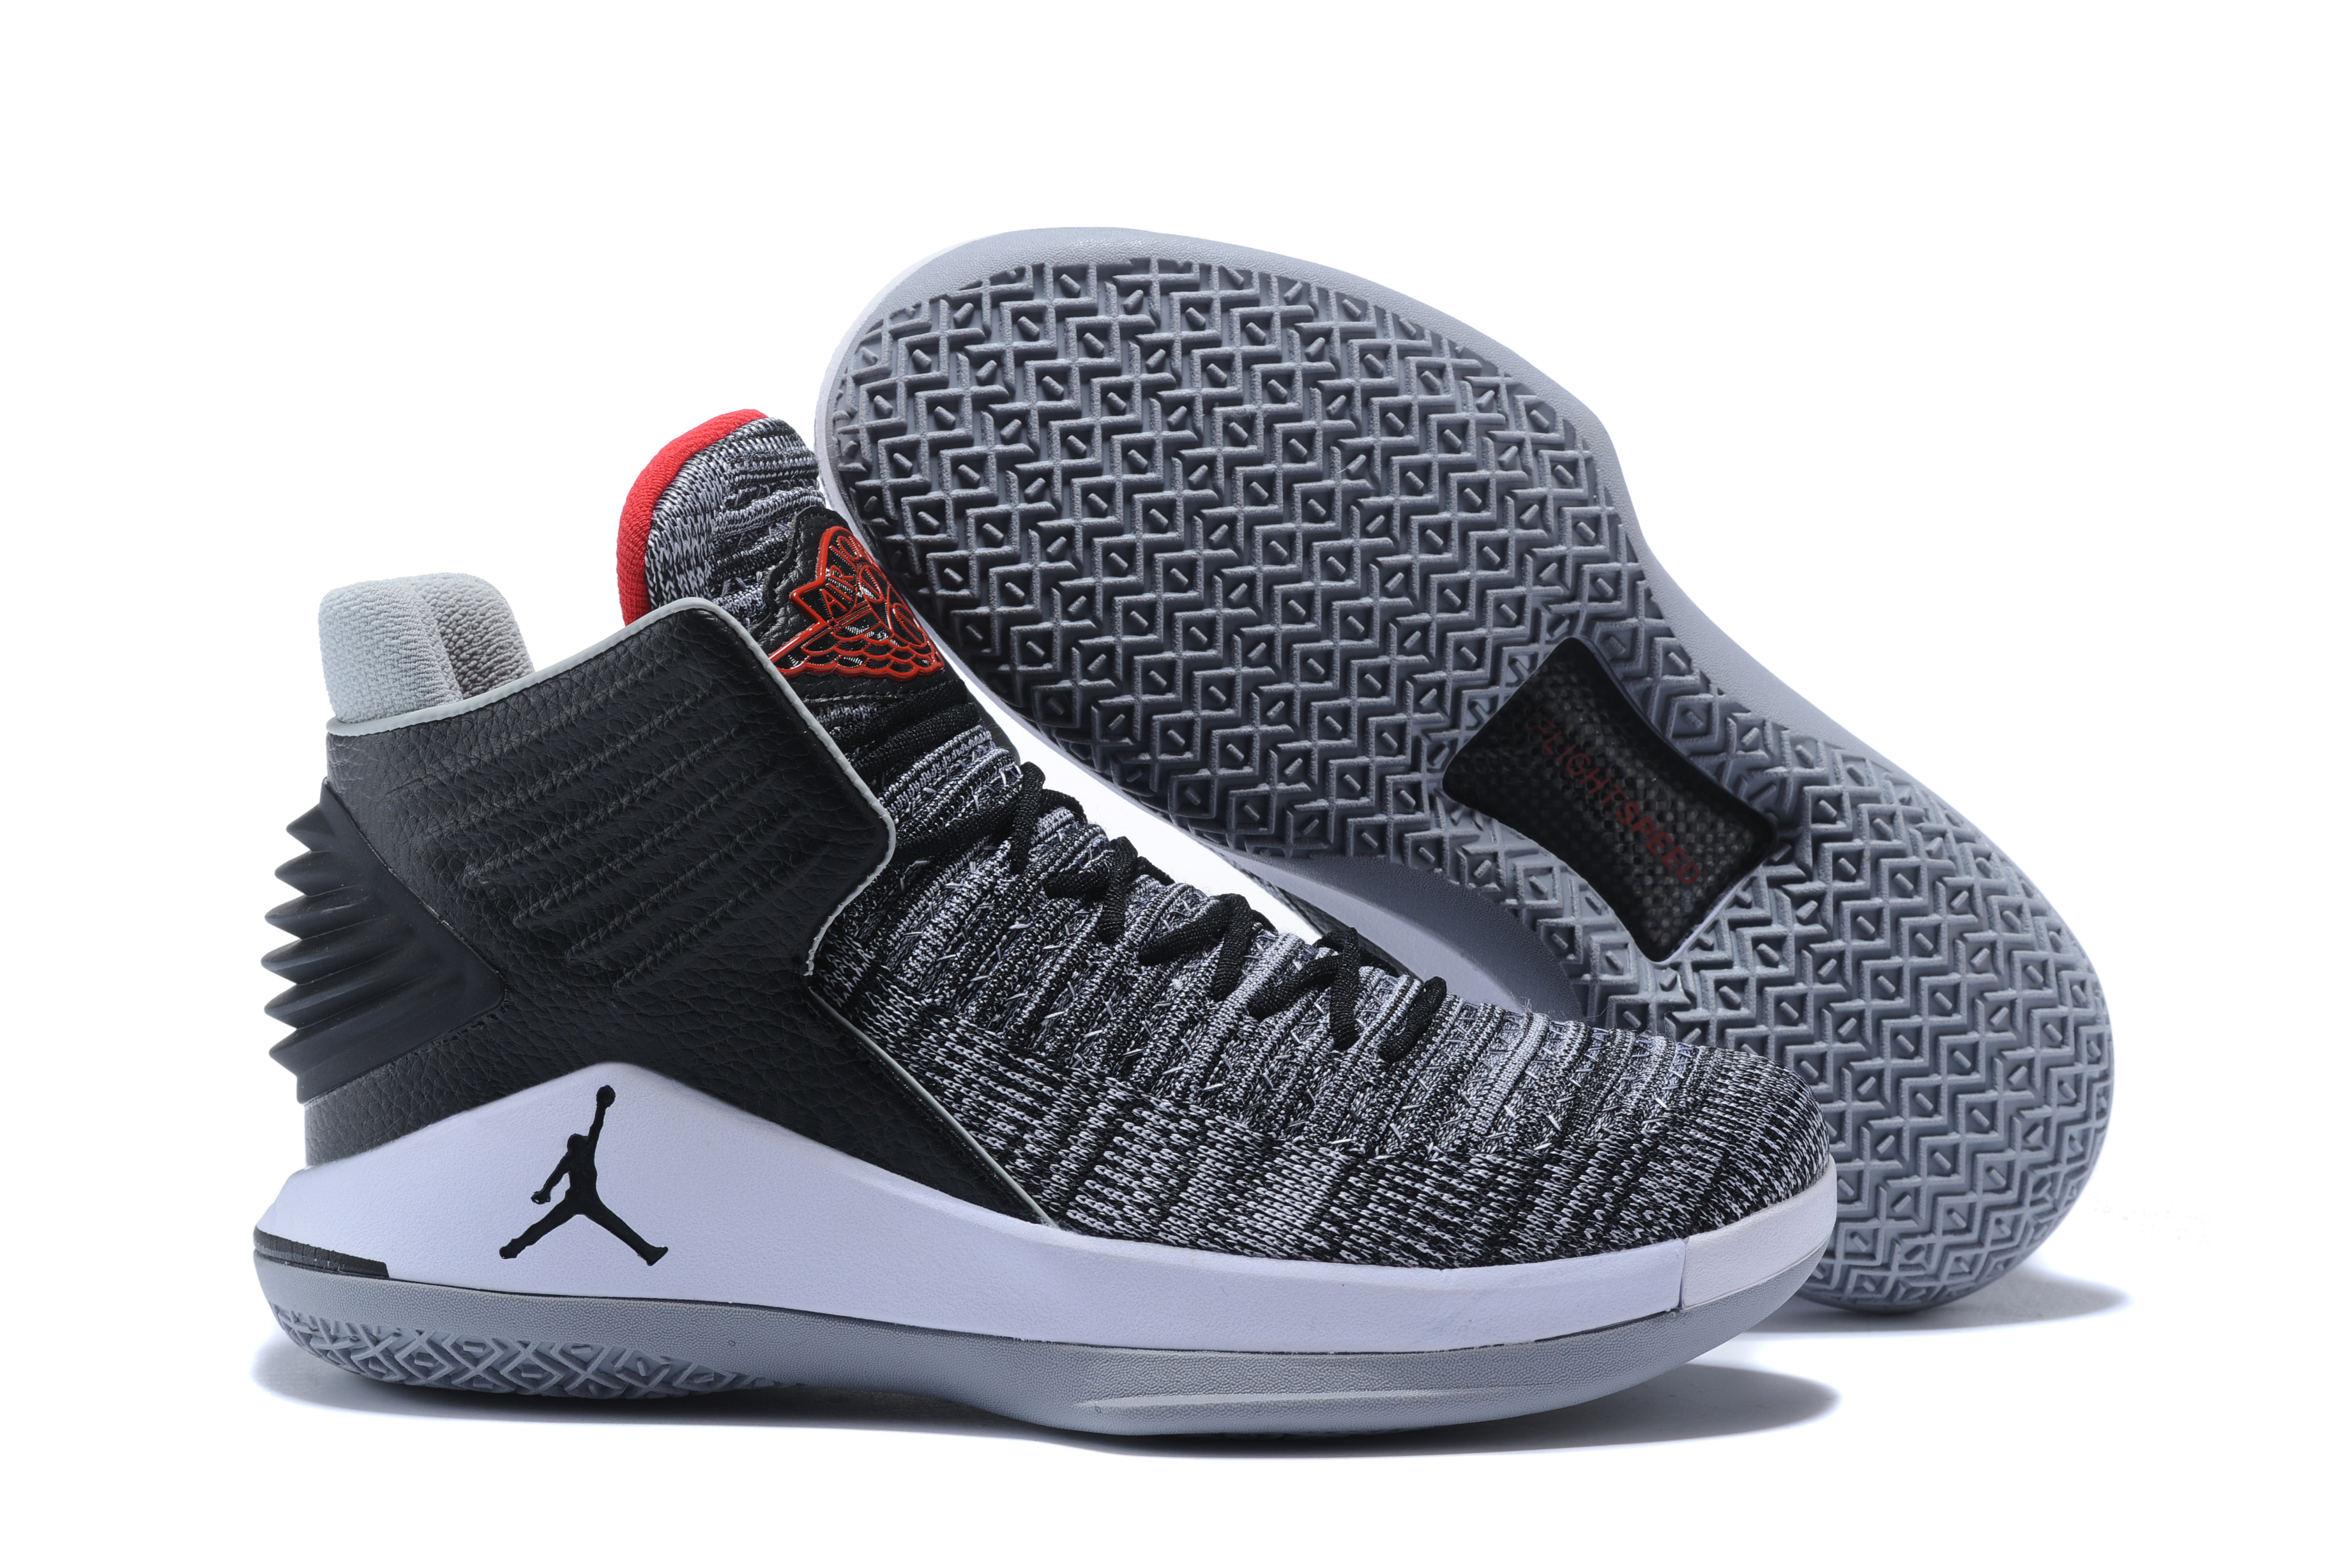 Original Air Jordan 32 Black Cement Shoes - Click Image to Close